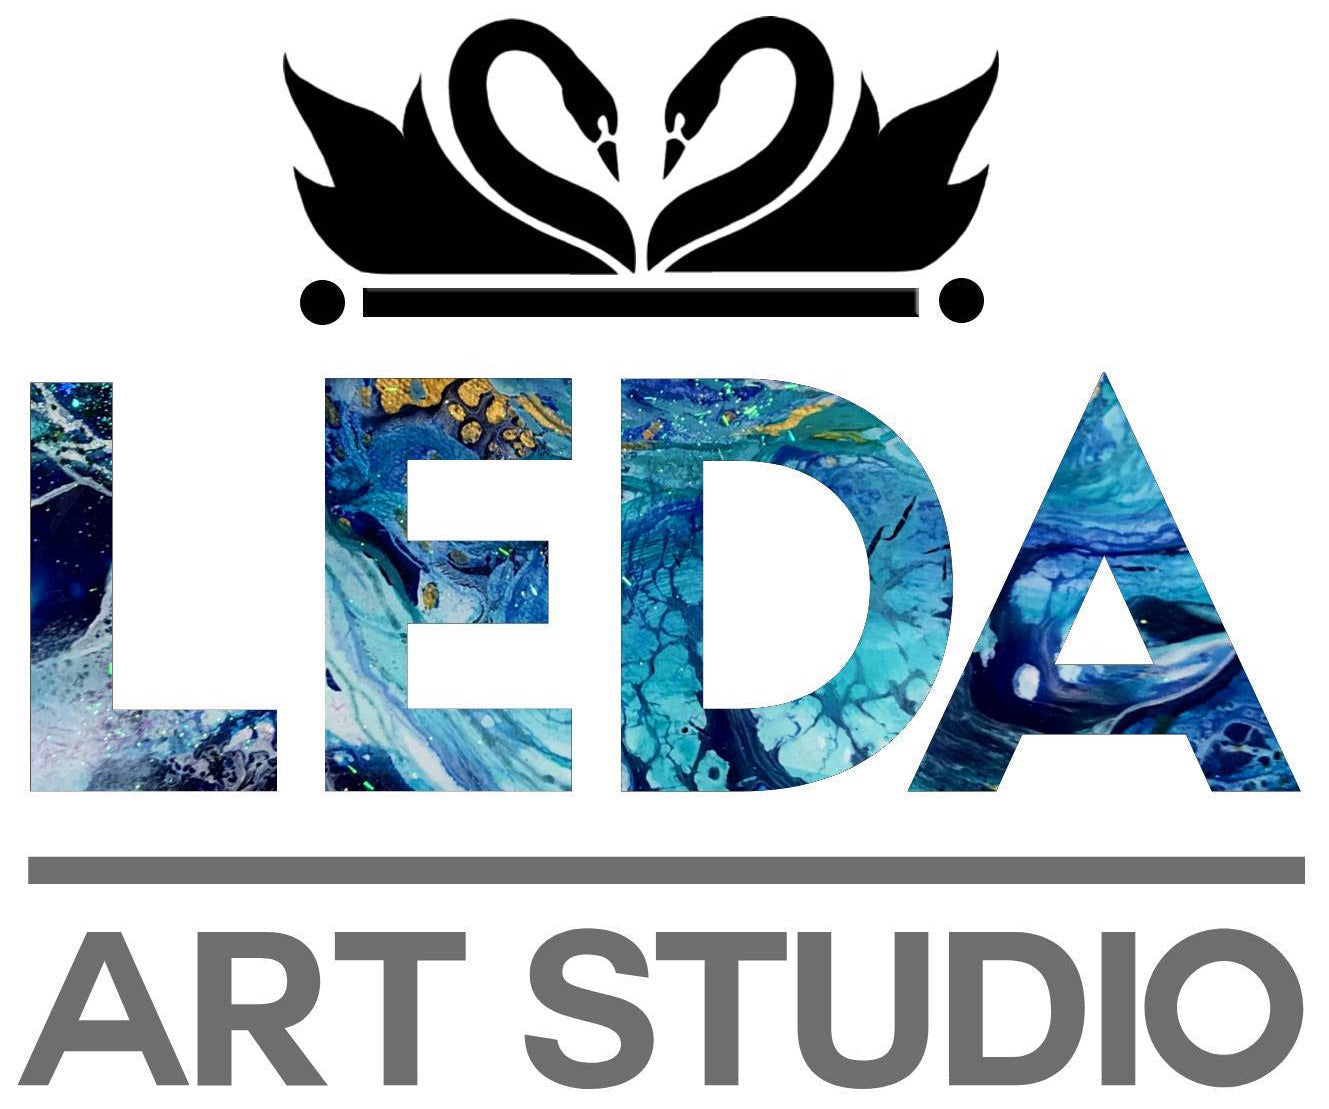 Leda Daniel Art Studio